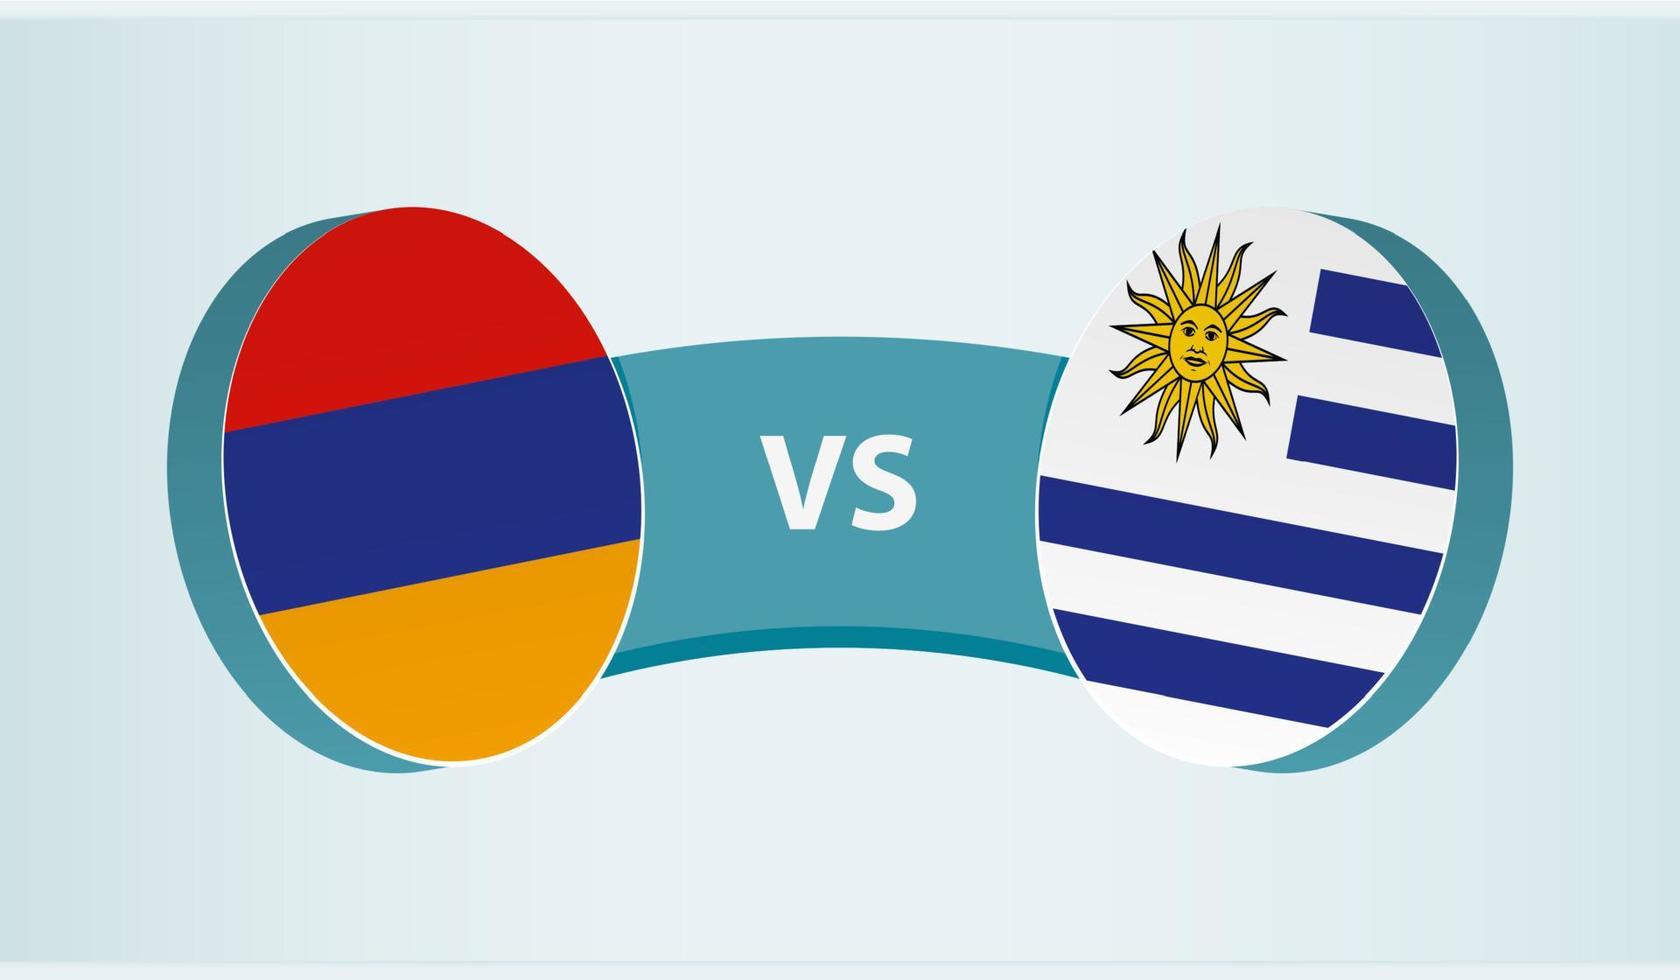 armenia mot uruguay, team sporter konkurrens begrepp. vektor